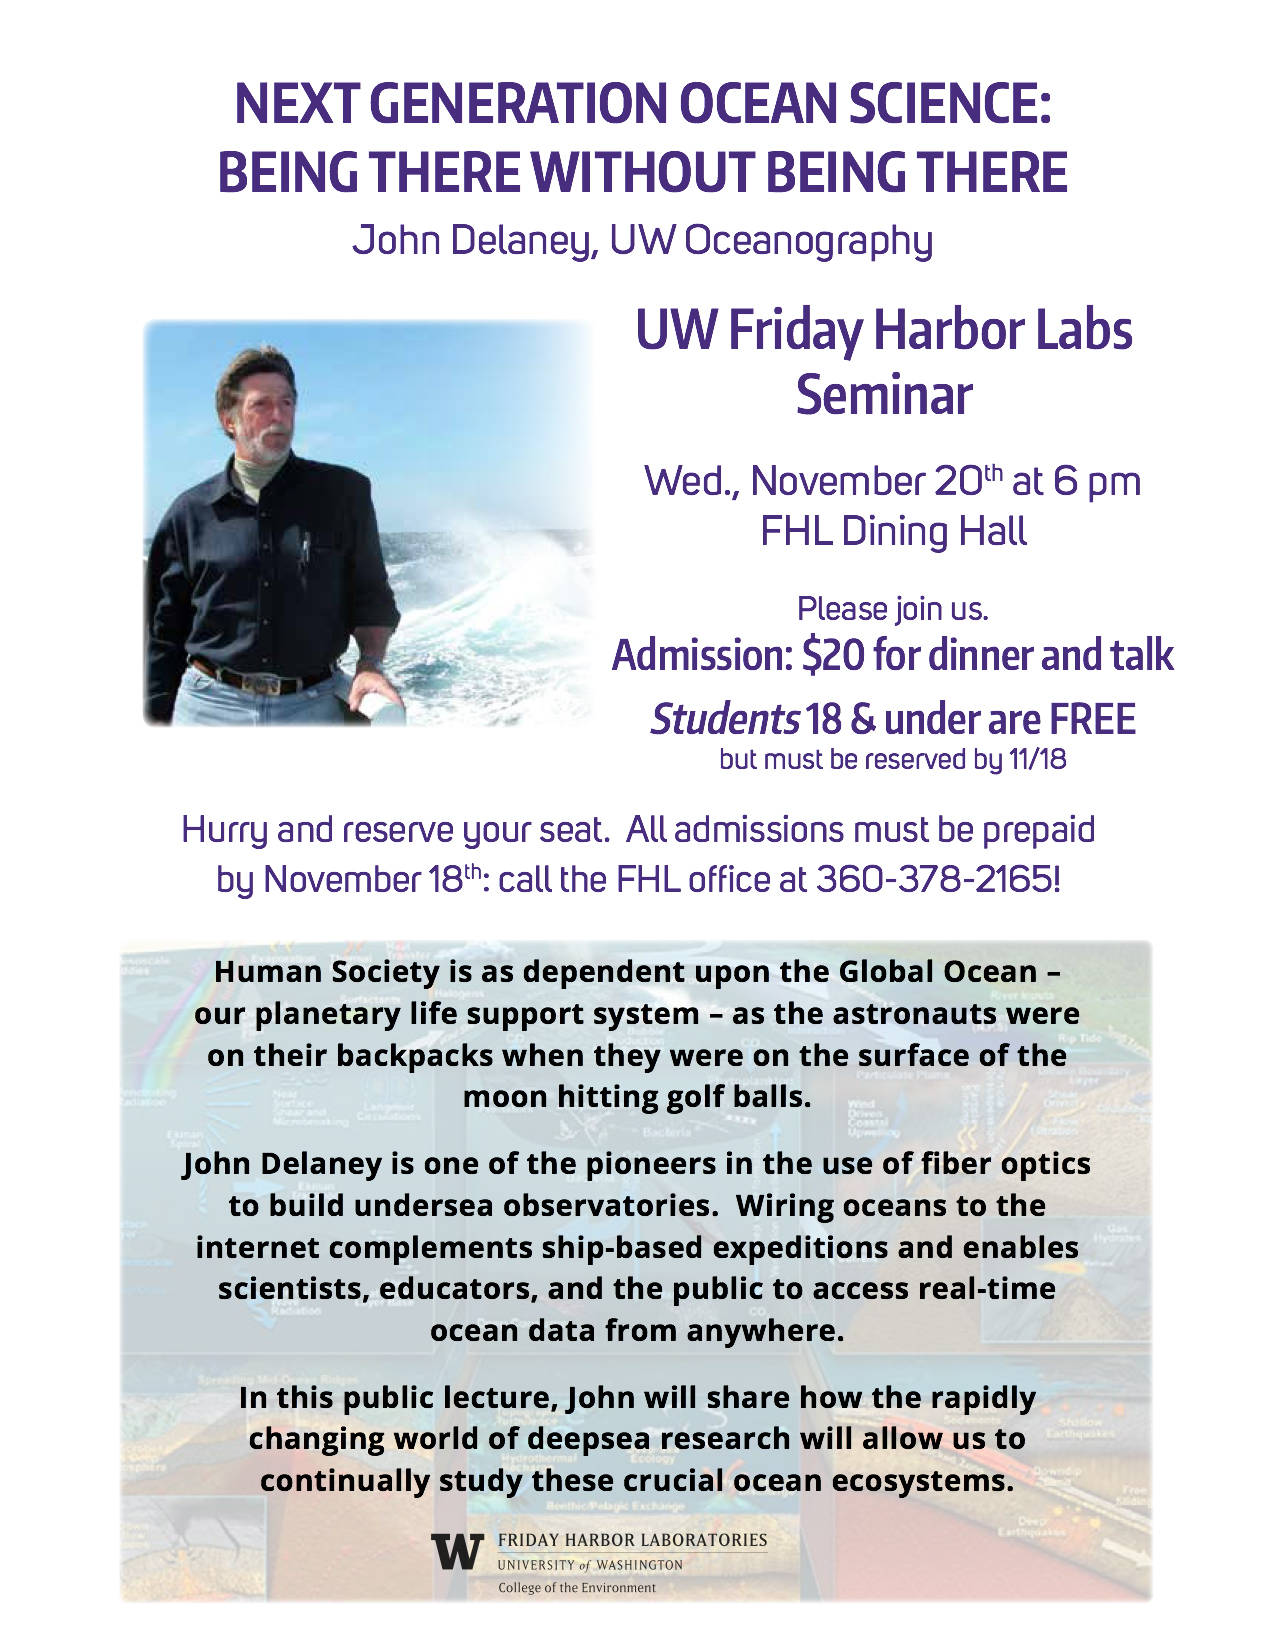 Friday Harbor Labs seminar, Nov. 20